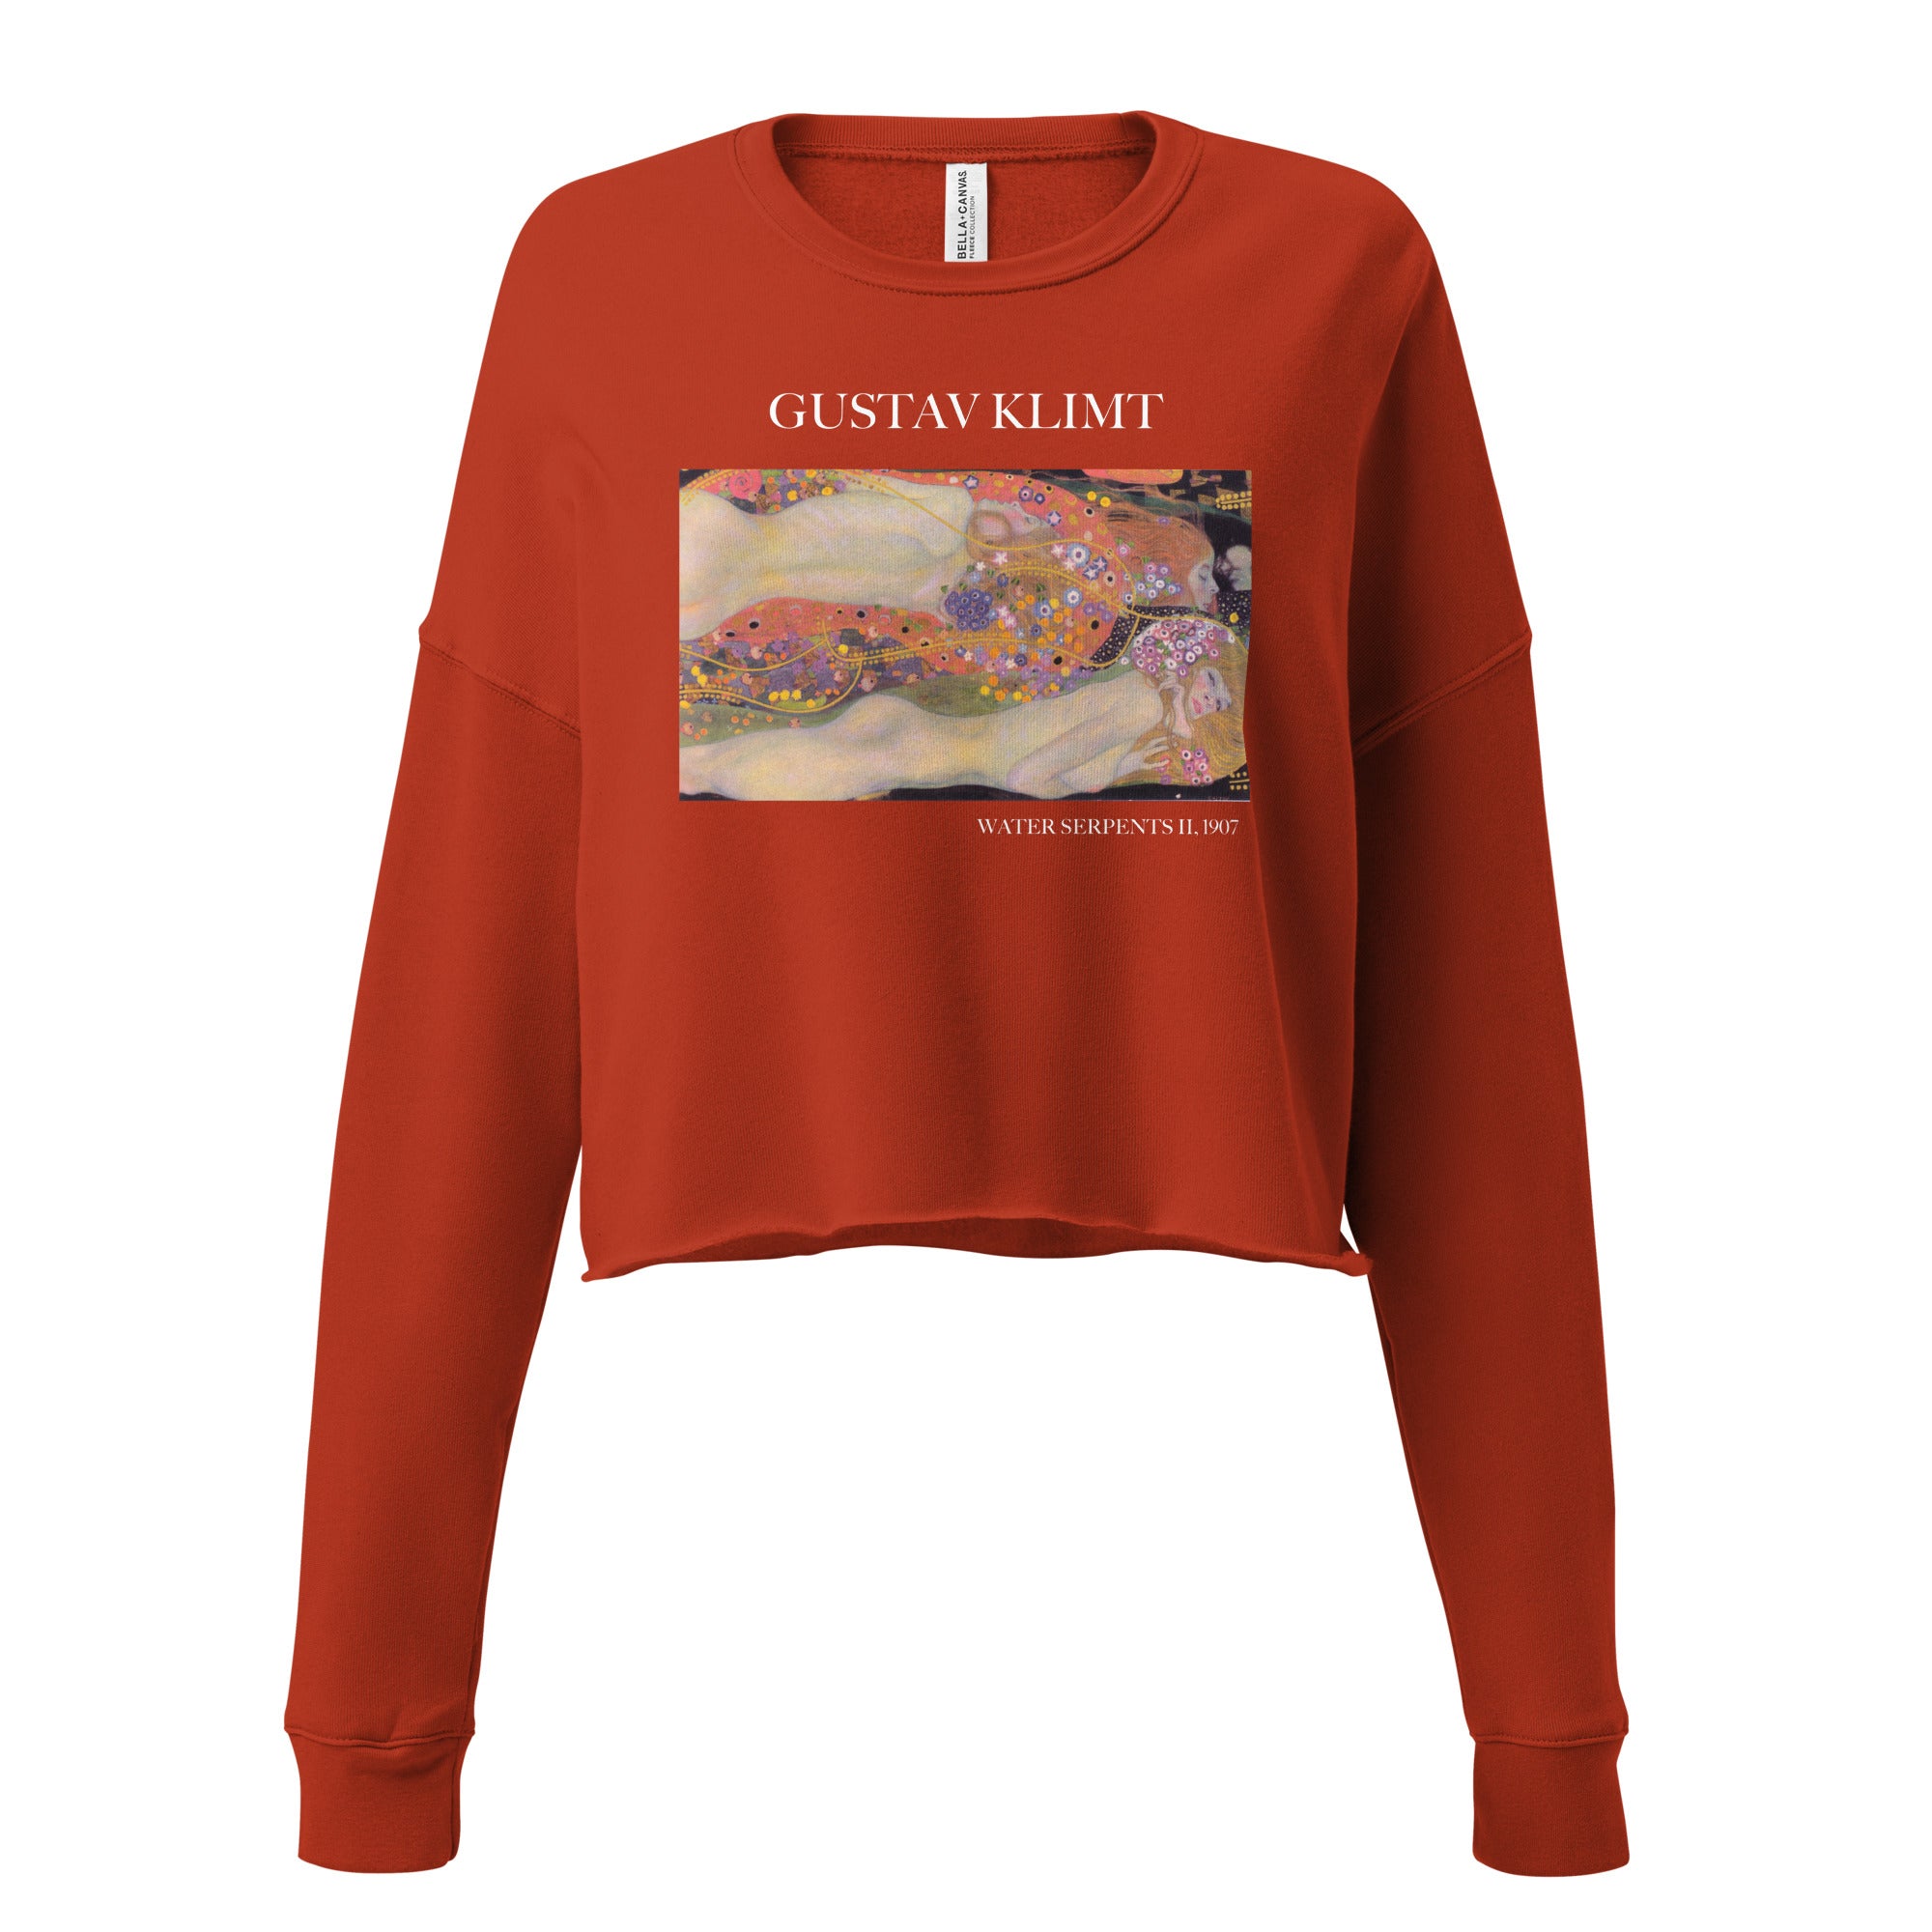 Gustav Klimt 'Water Serpents II' Famous Painting Cropped Sweatshirt | Premium Art Cropped Sweatshirt